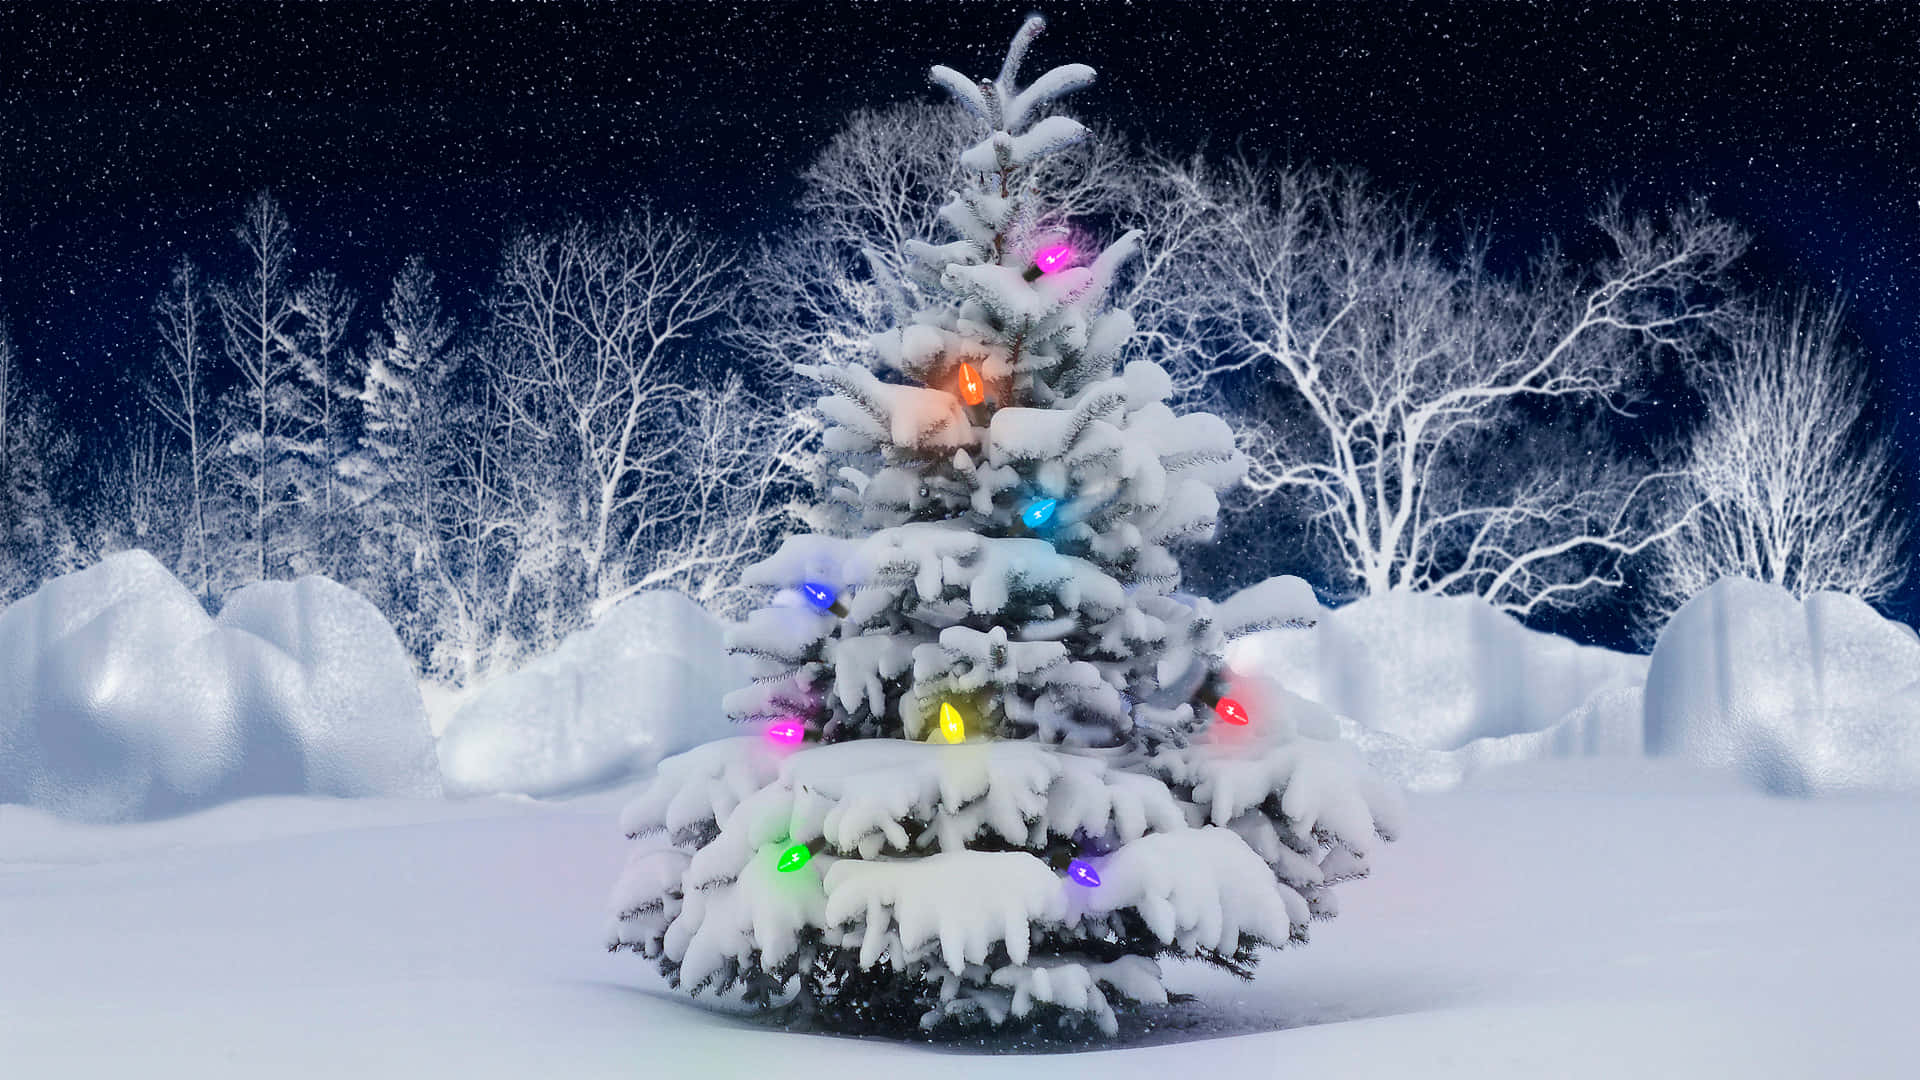 Celebrate the season of joy with this festive Christmas winter scene. Wallpaper